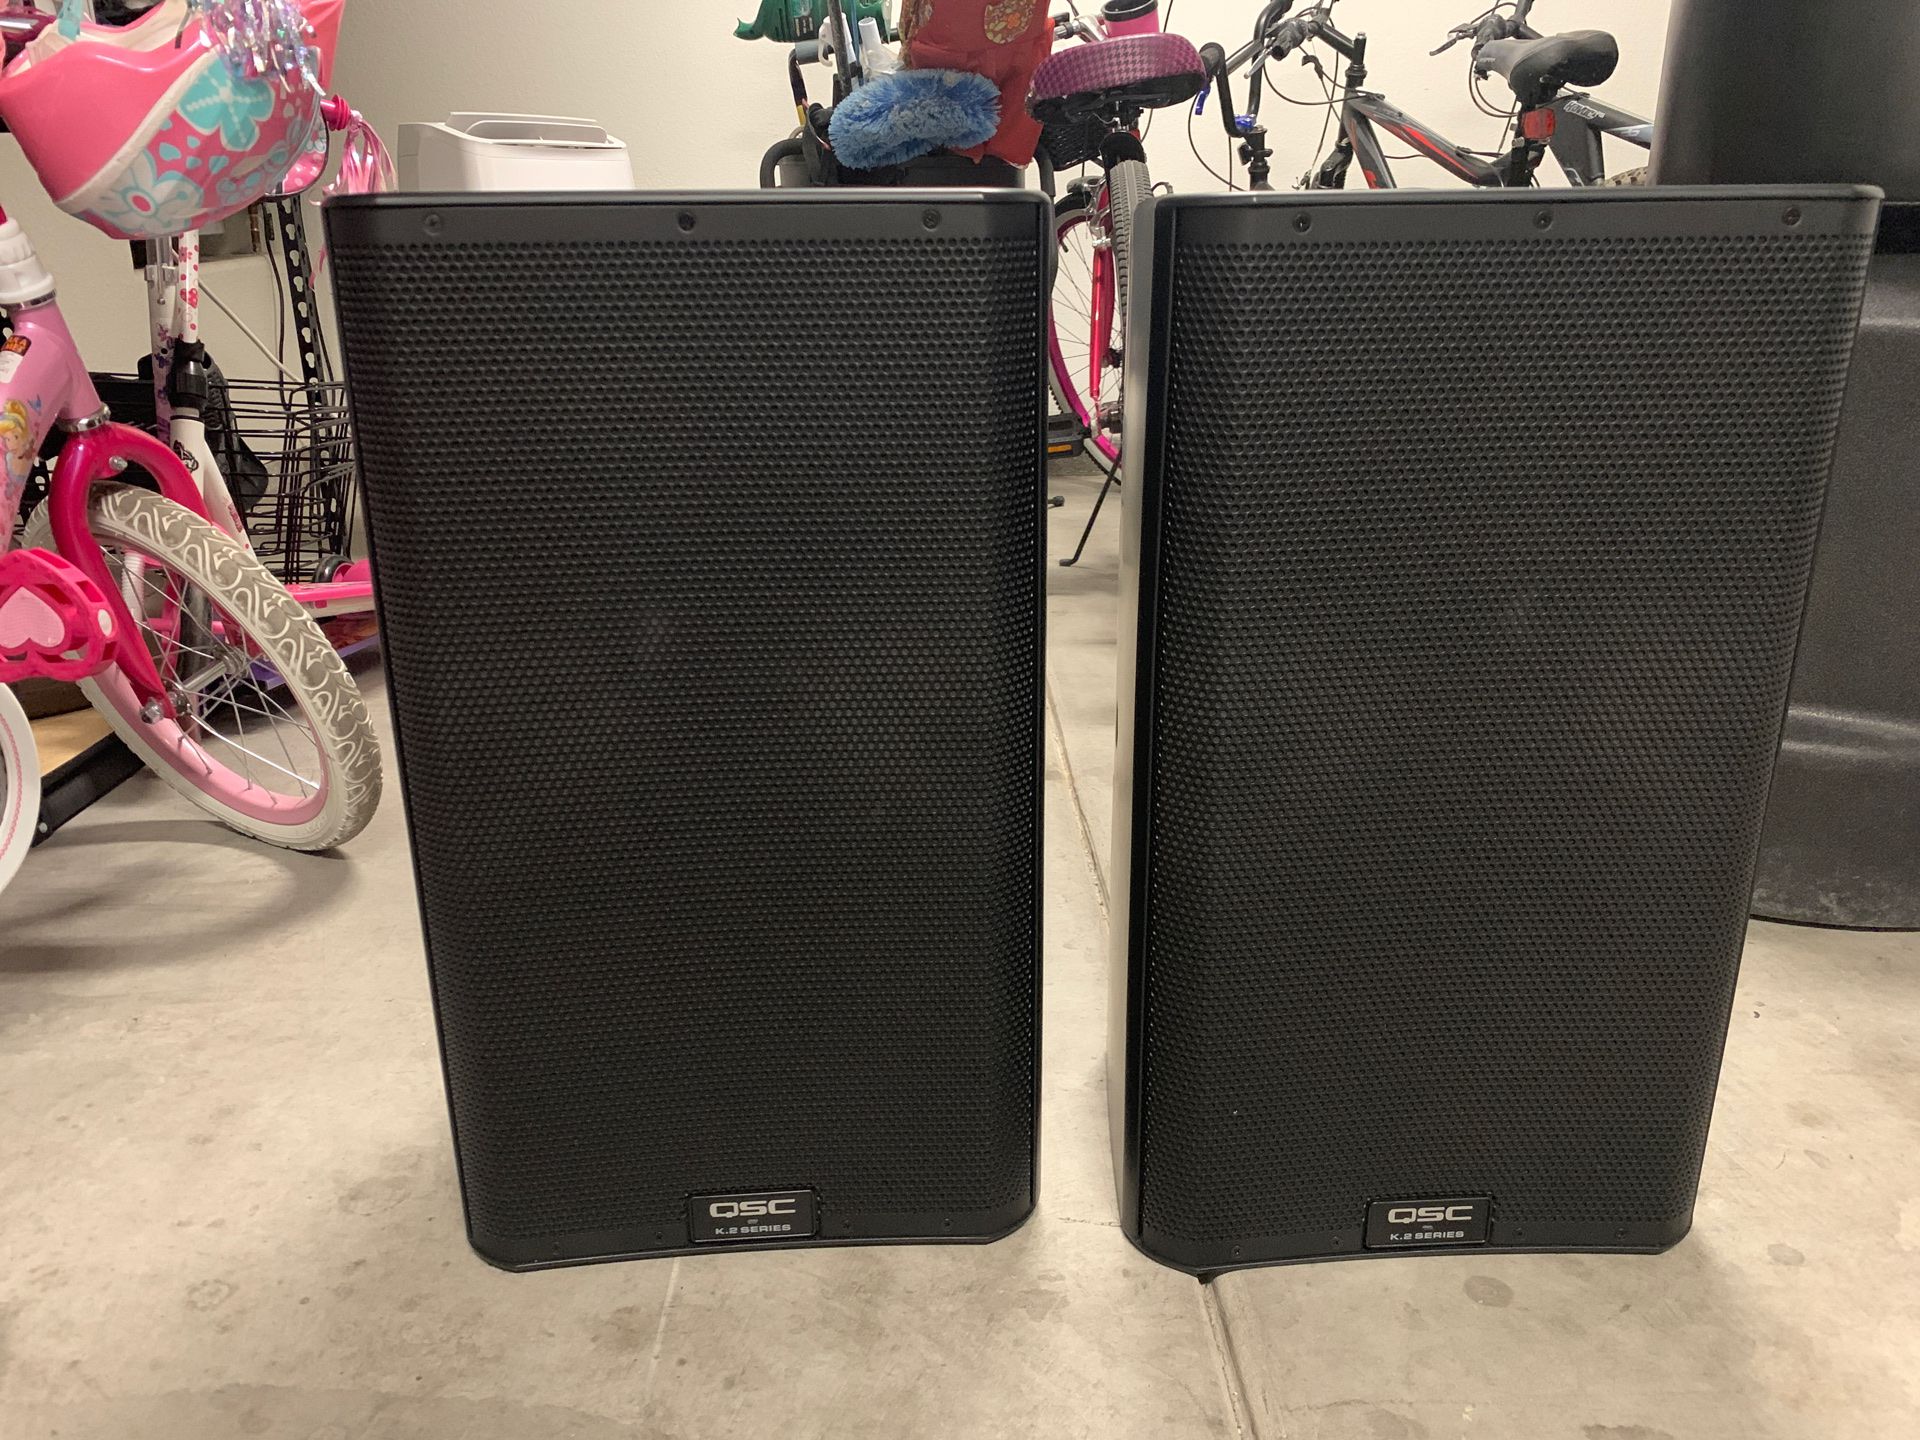 QSE K12.2 Powered Speakers $1200